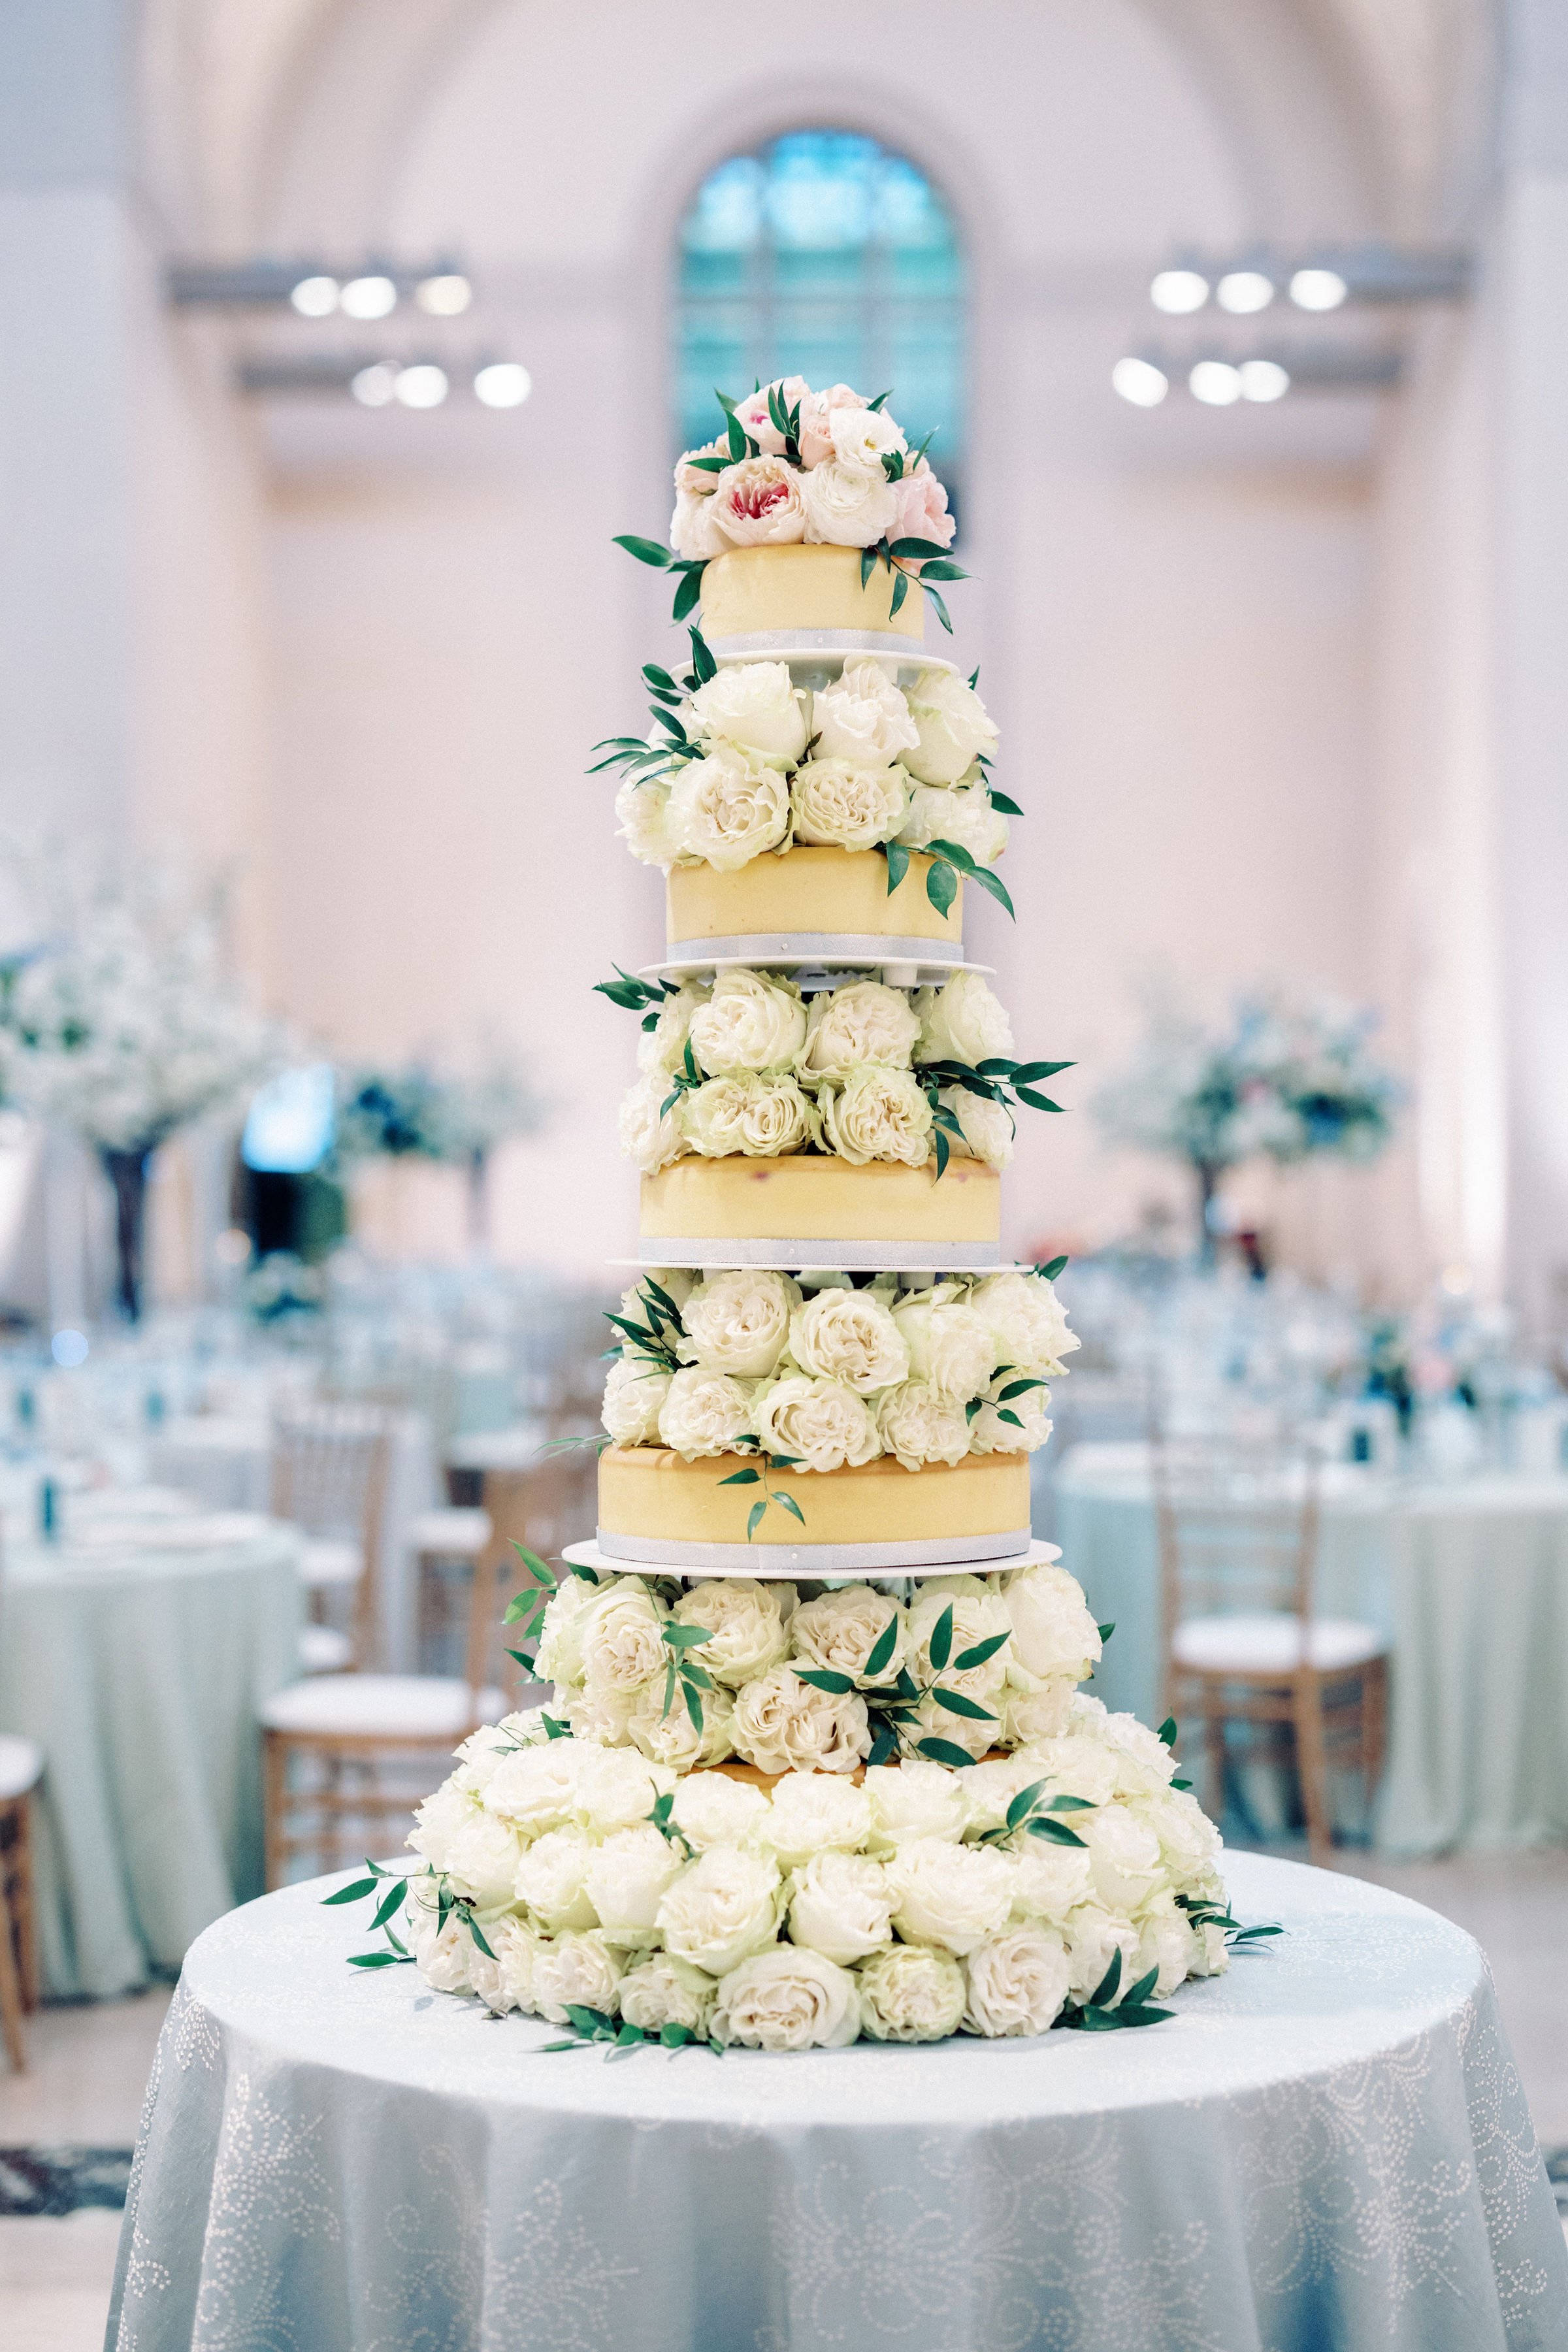 Belli-Fiori-Wedding-Cake-Flowers-2.jpg